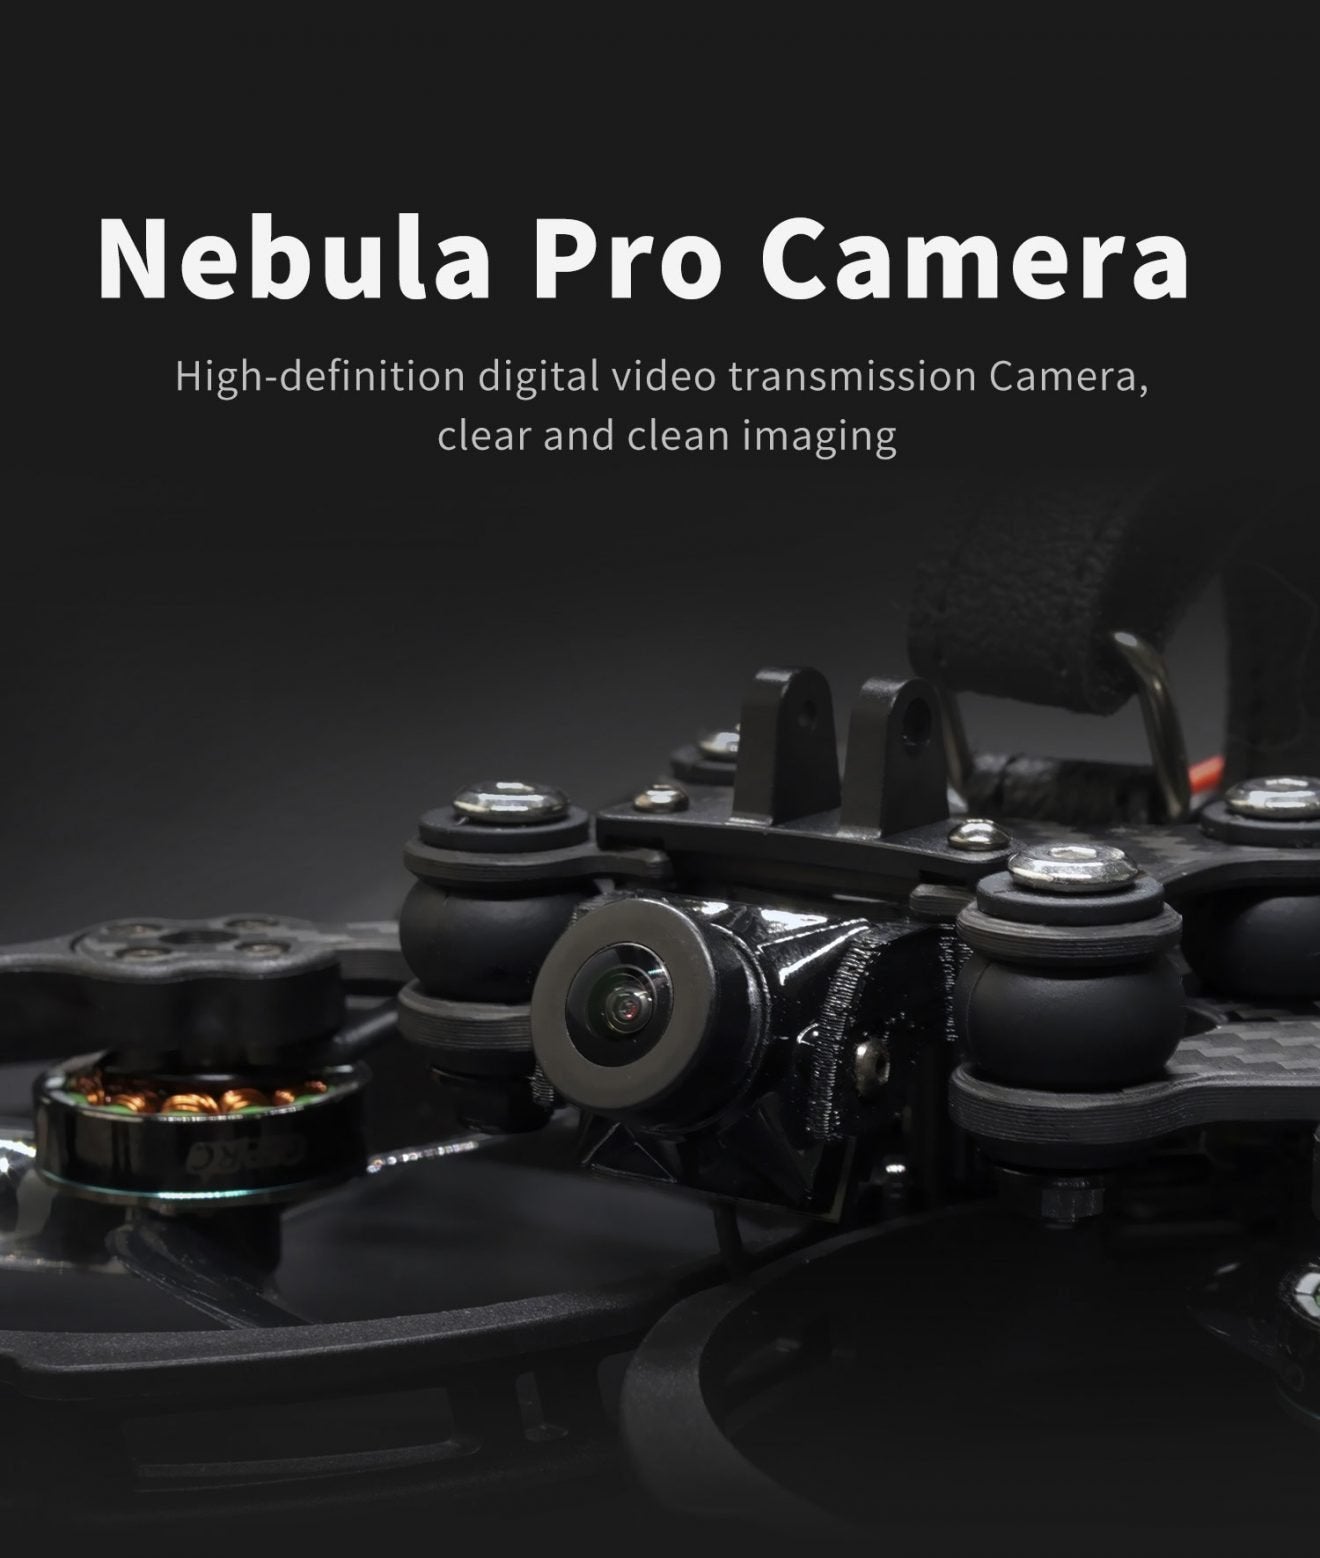 GEPRC CineLog35 FPV Drone, Nebula Pro Camera High-definition digital video transmission Camera, clear and clean